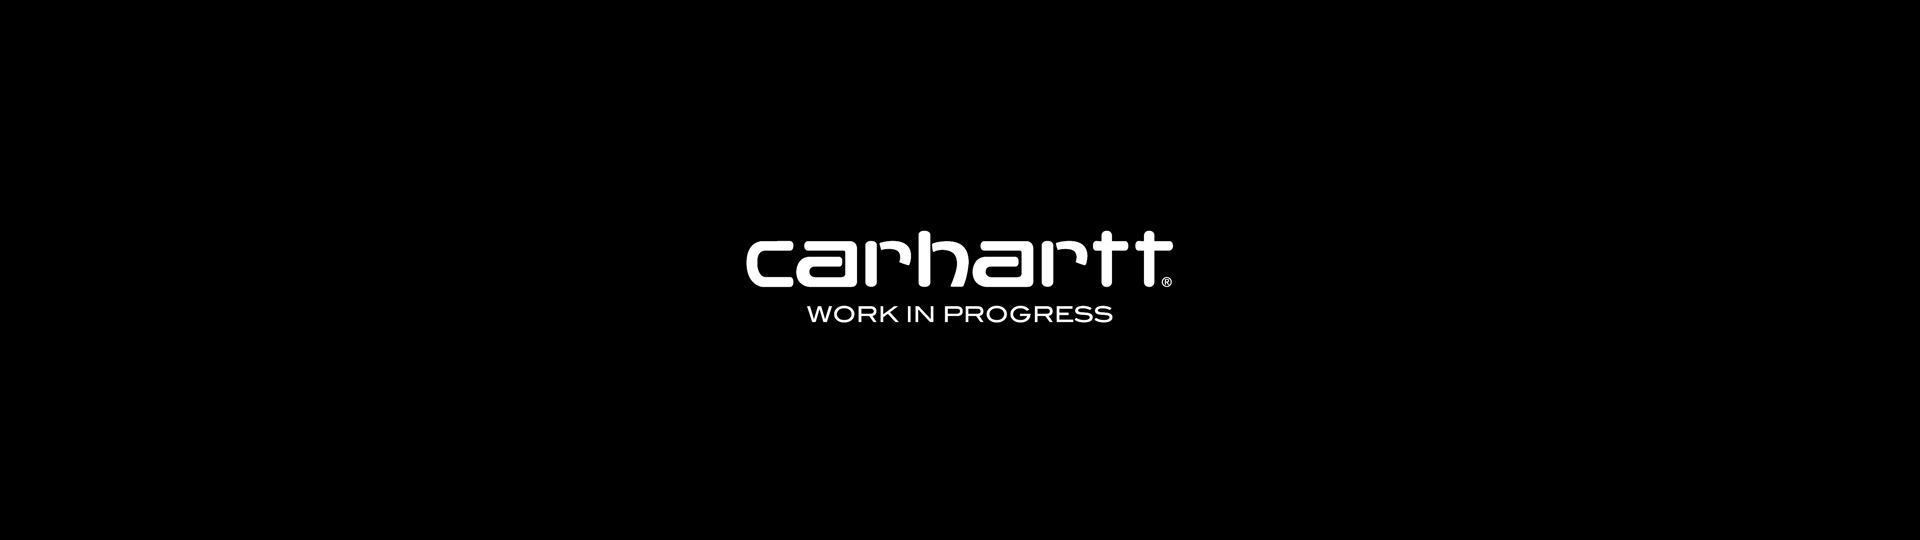 Carhartt-wide